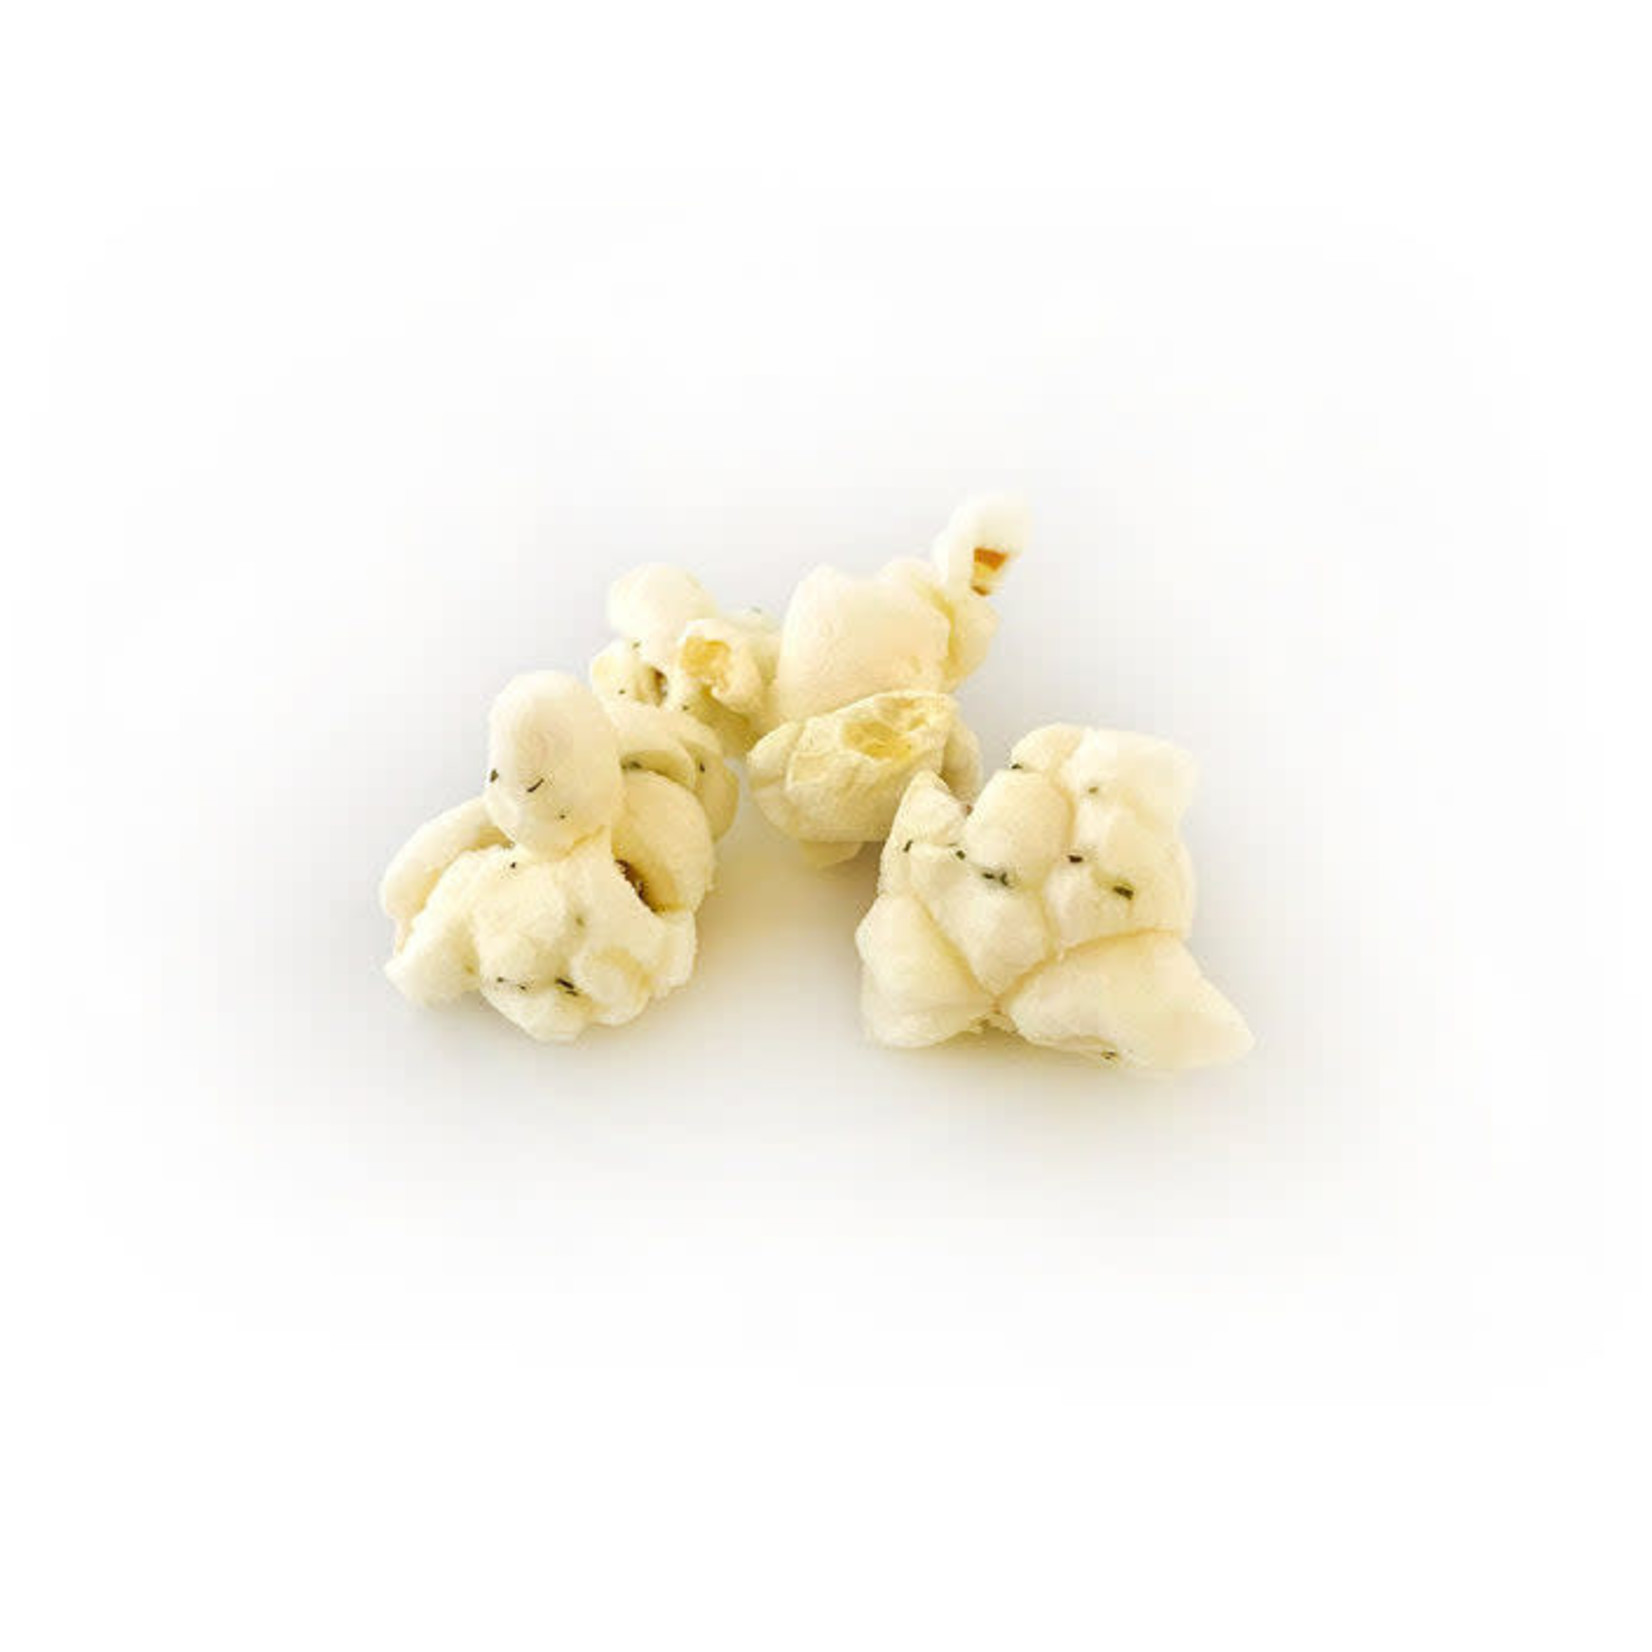 Poppy Handcrafted Popcorn Poppy Popcorn - Dill Pickle